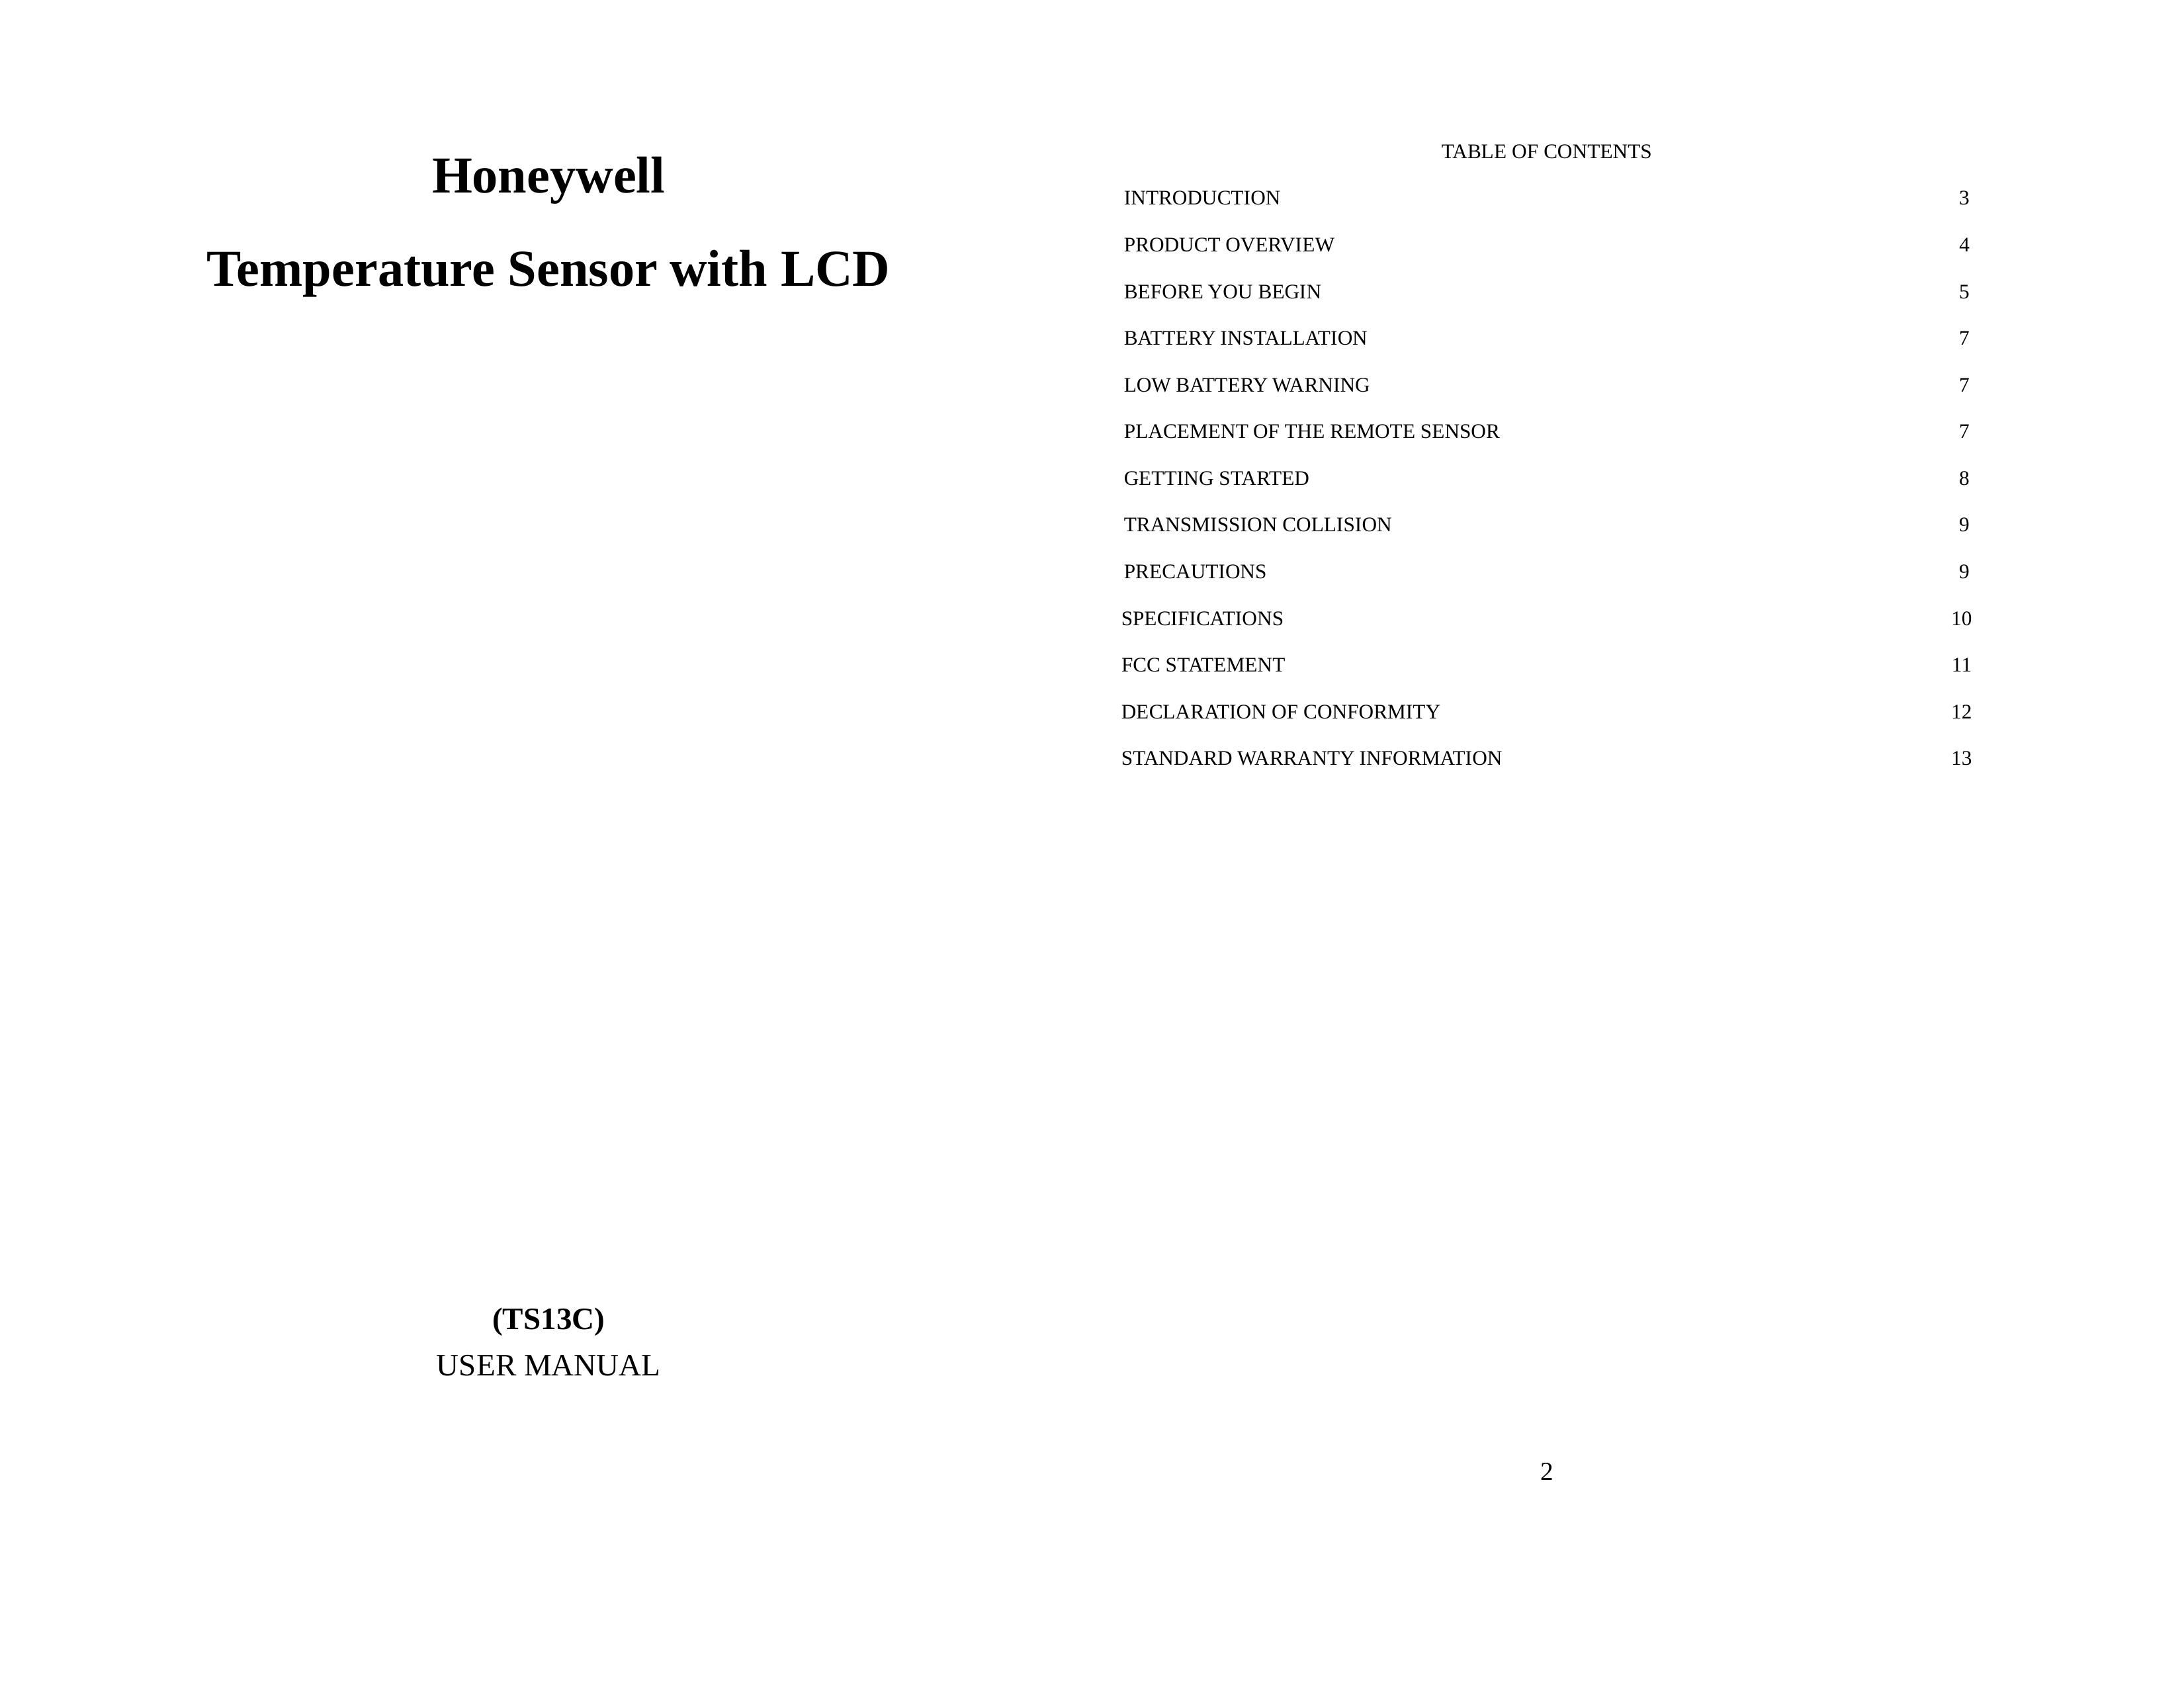 Honeywell TS13C Weather Radio User Manual